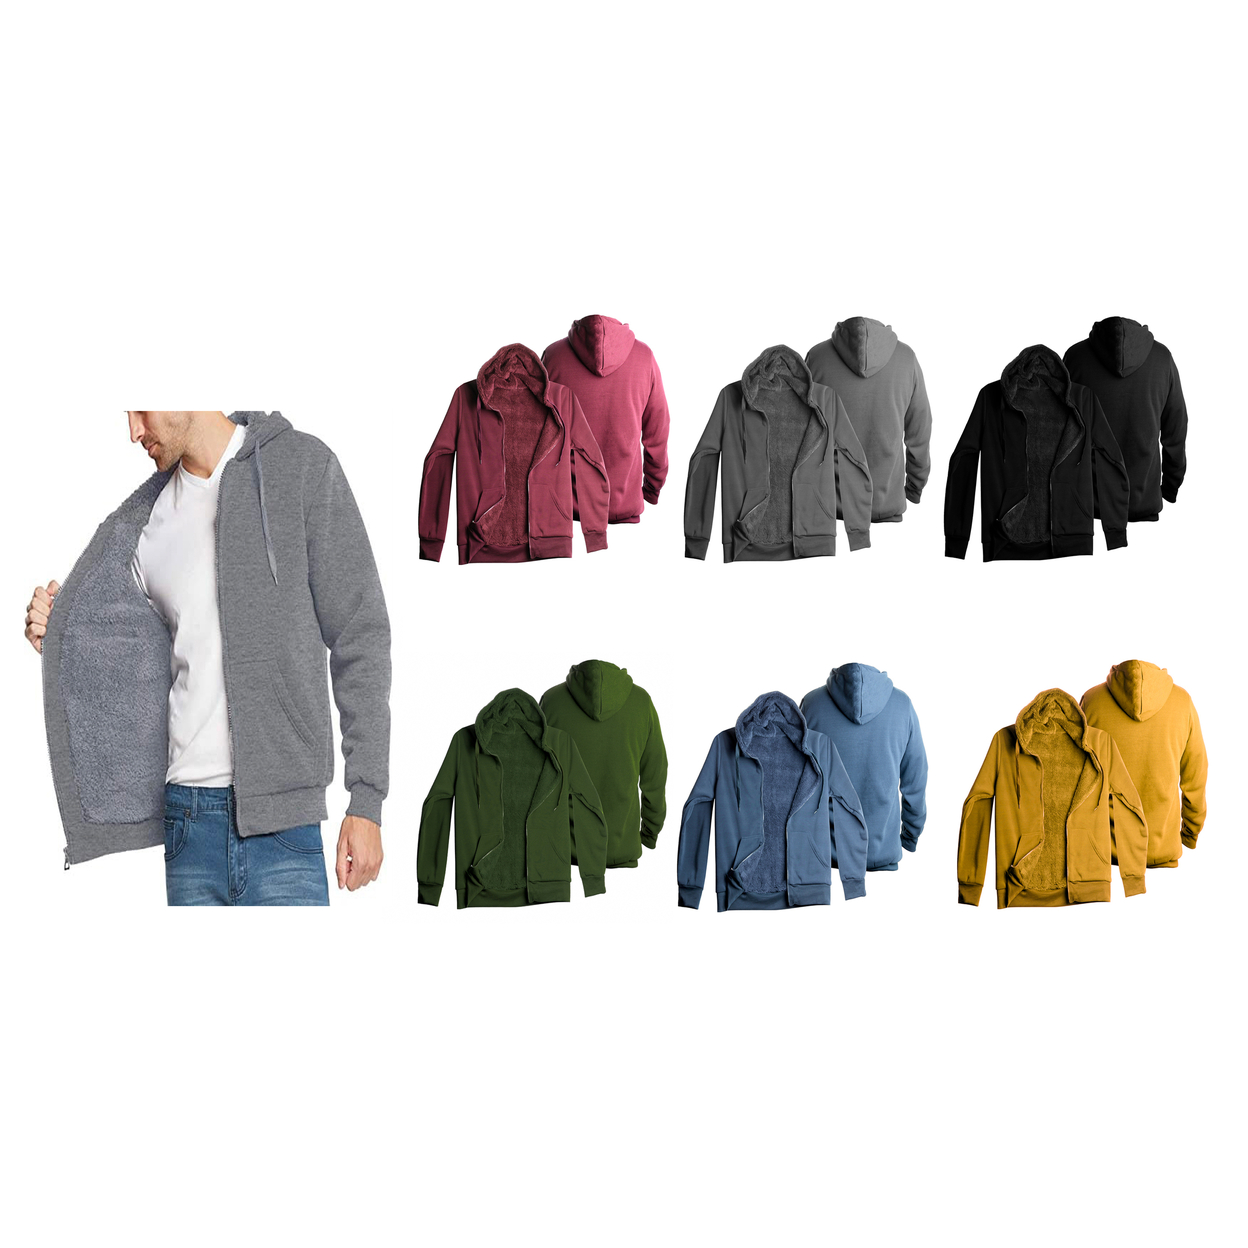 Men's Big & Tall Heavyweight Soft Sherpa Lined Fleece Zip-Up Hoodie Sweater Jacket - Burgundy, 3x